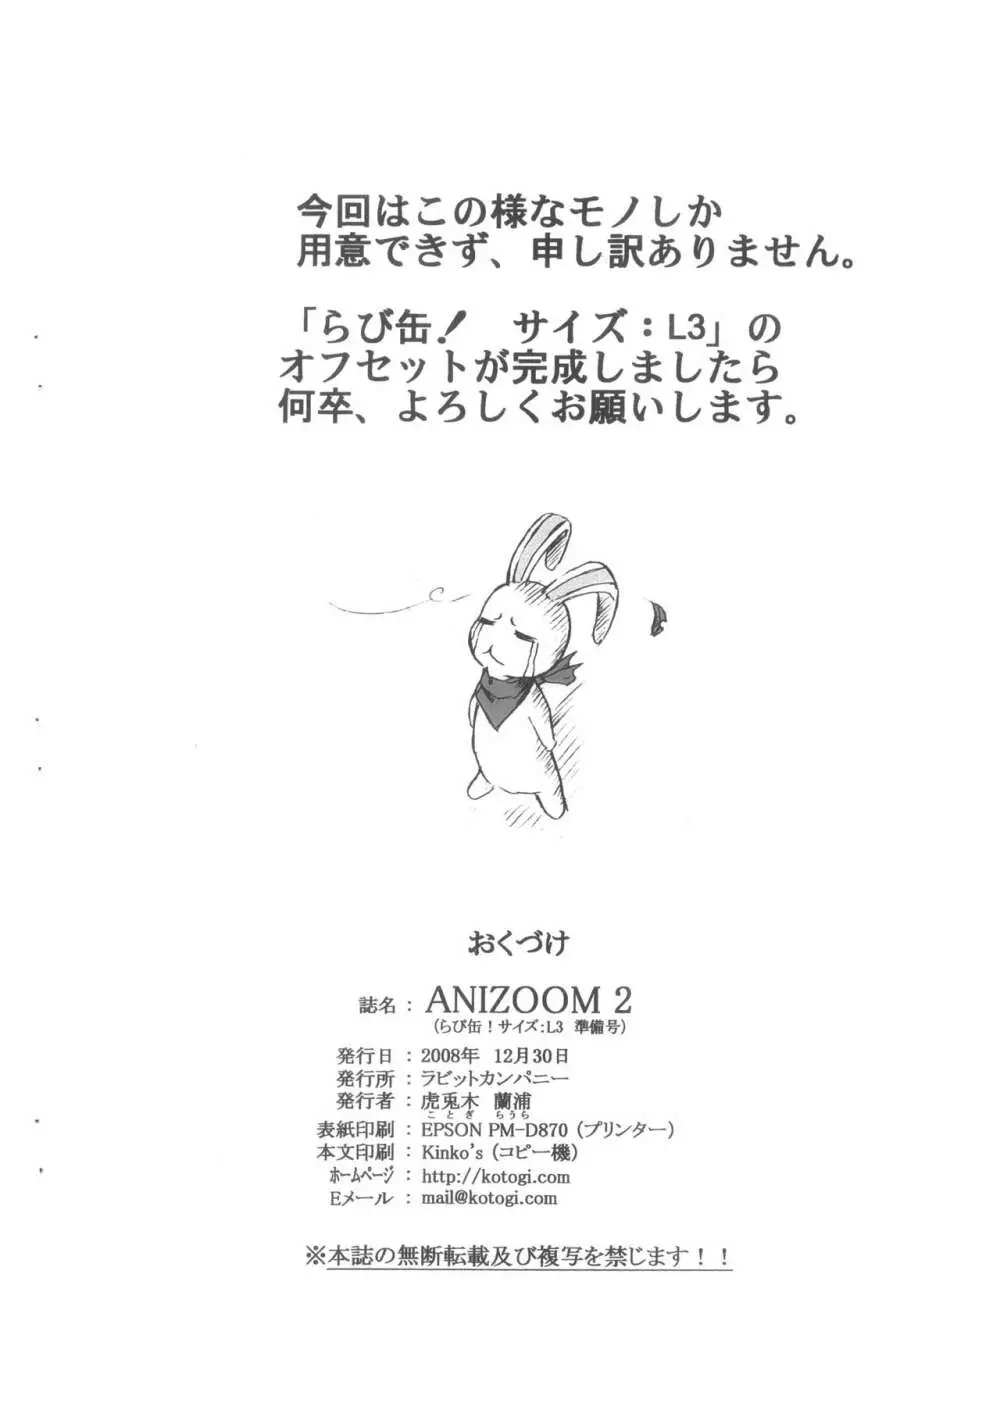 ANIZOOM 2 らび缶! サイズ:L3 準備号 - page15